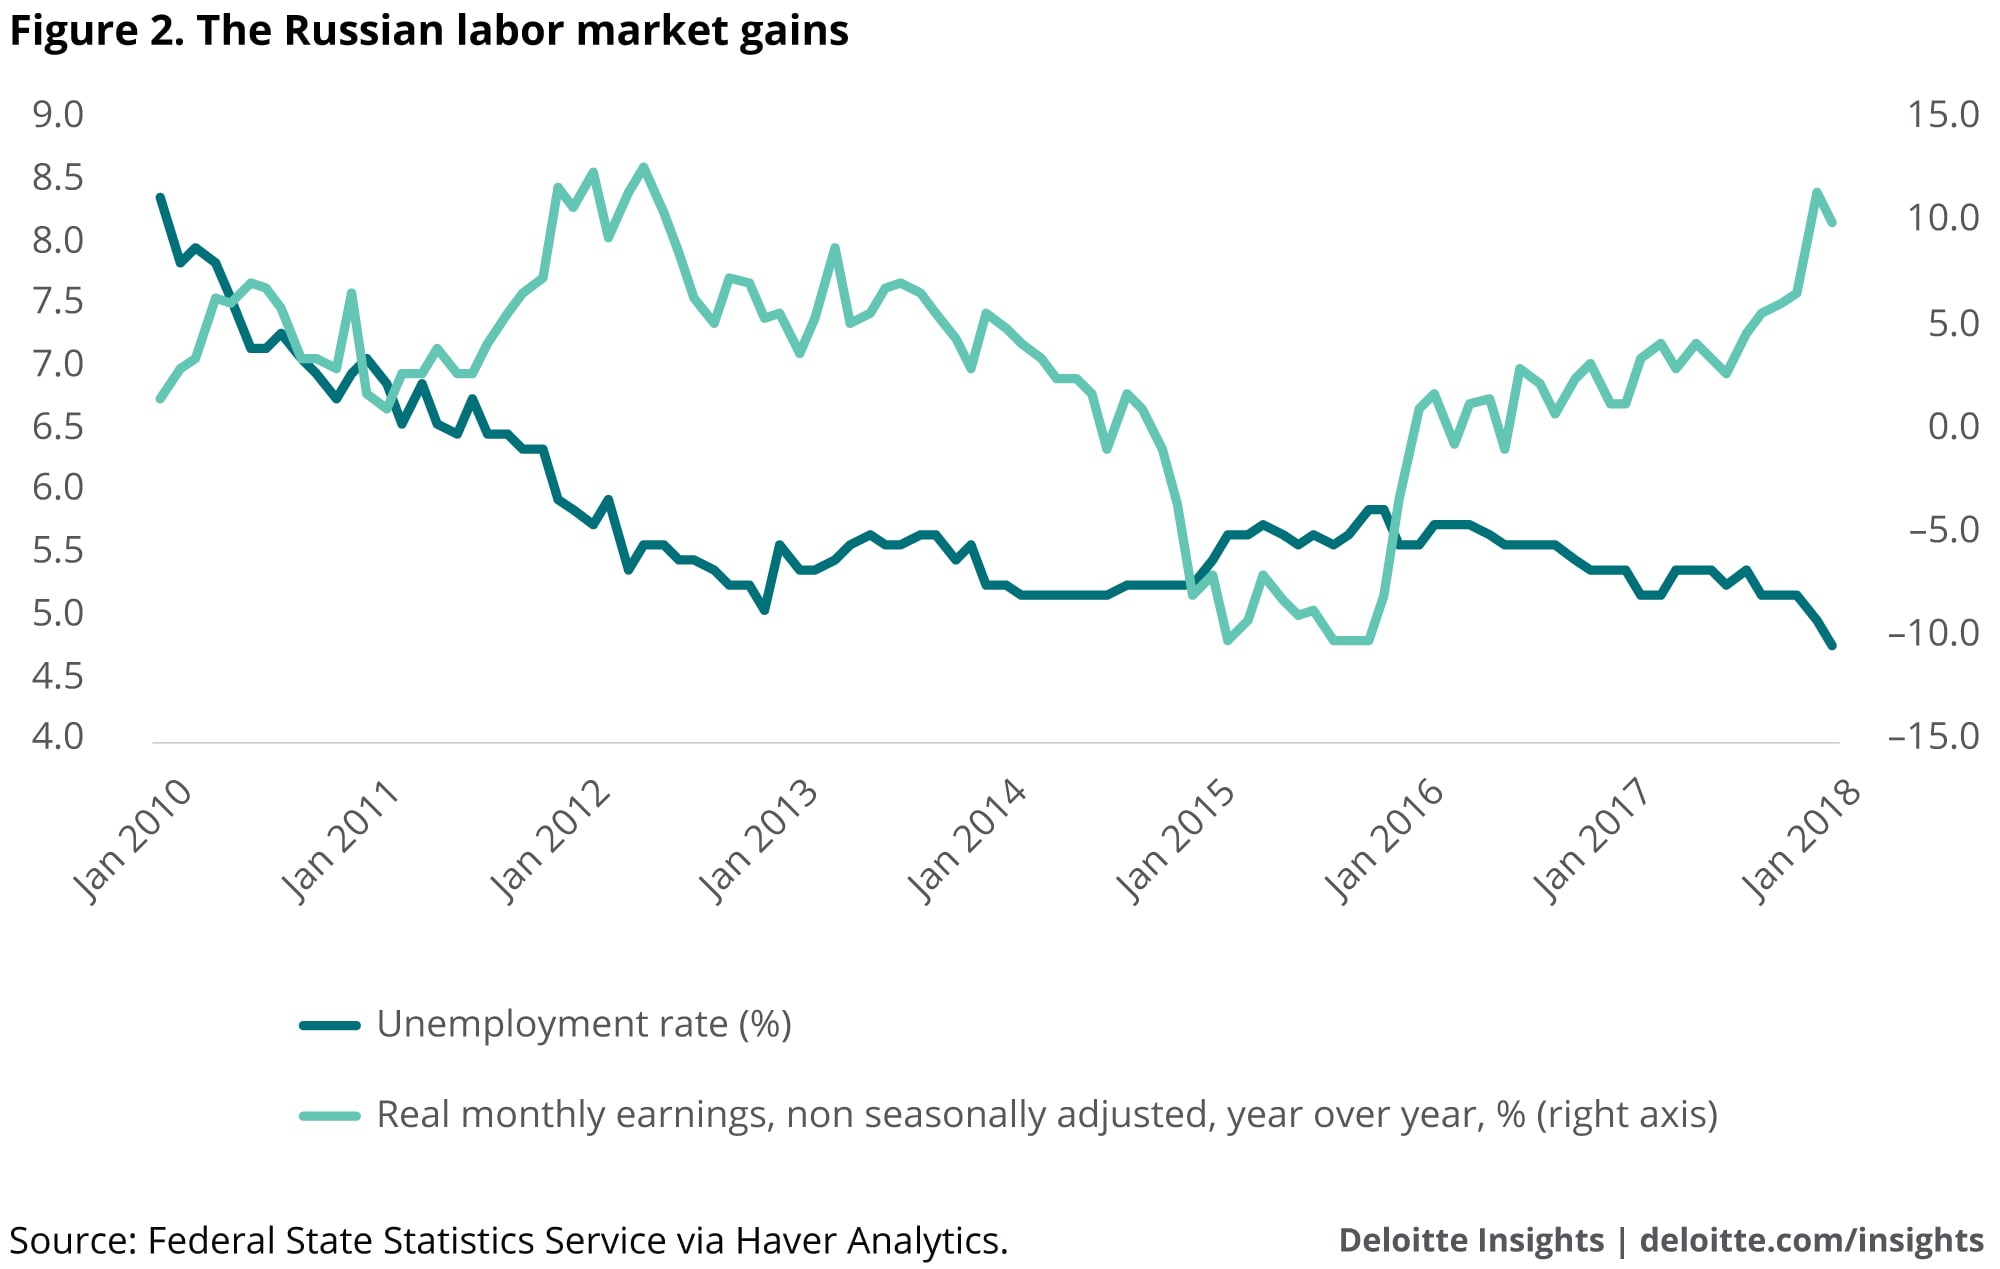 The Russian labor market gains